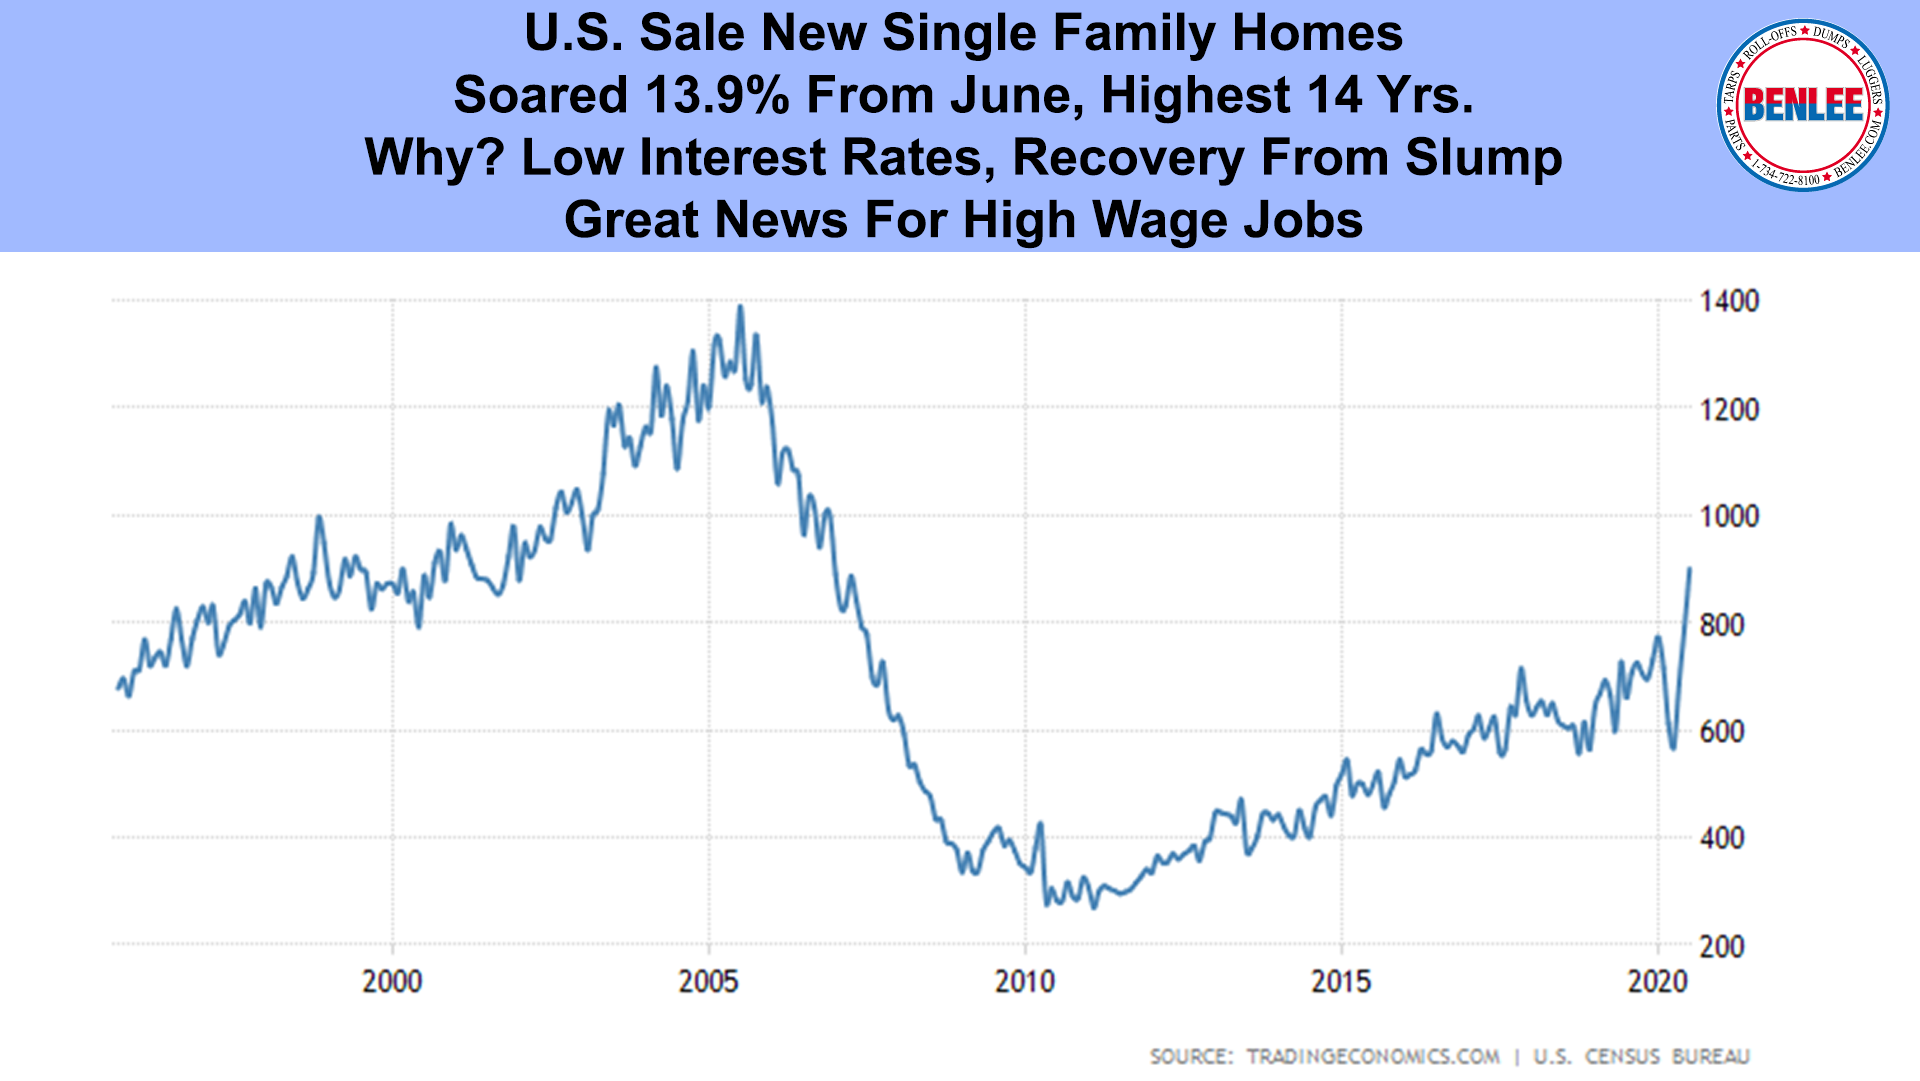 U.S. Sale New Single Family Homes